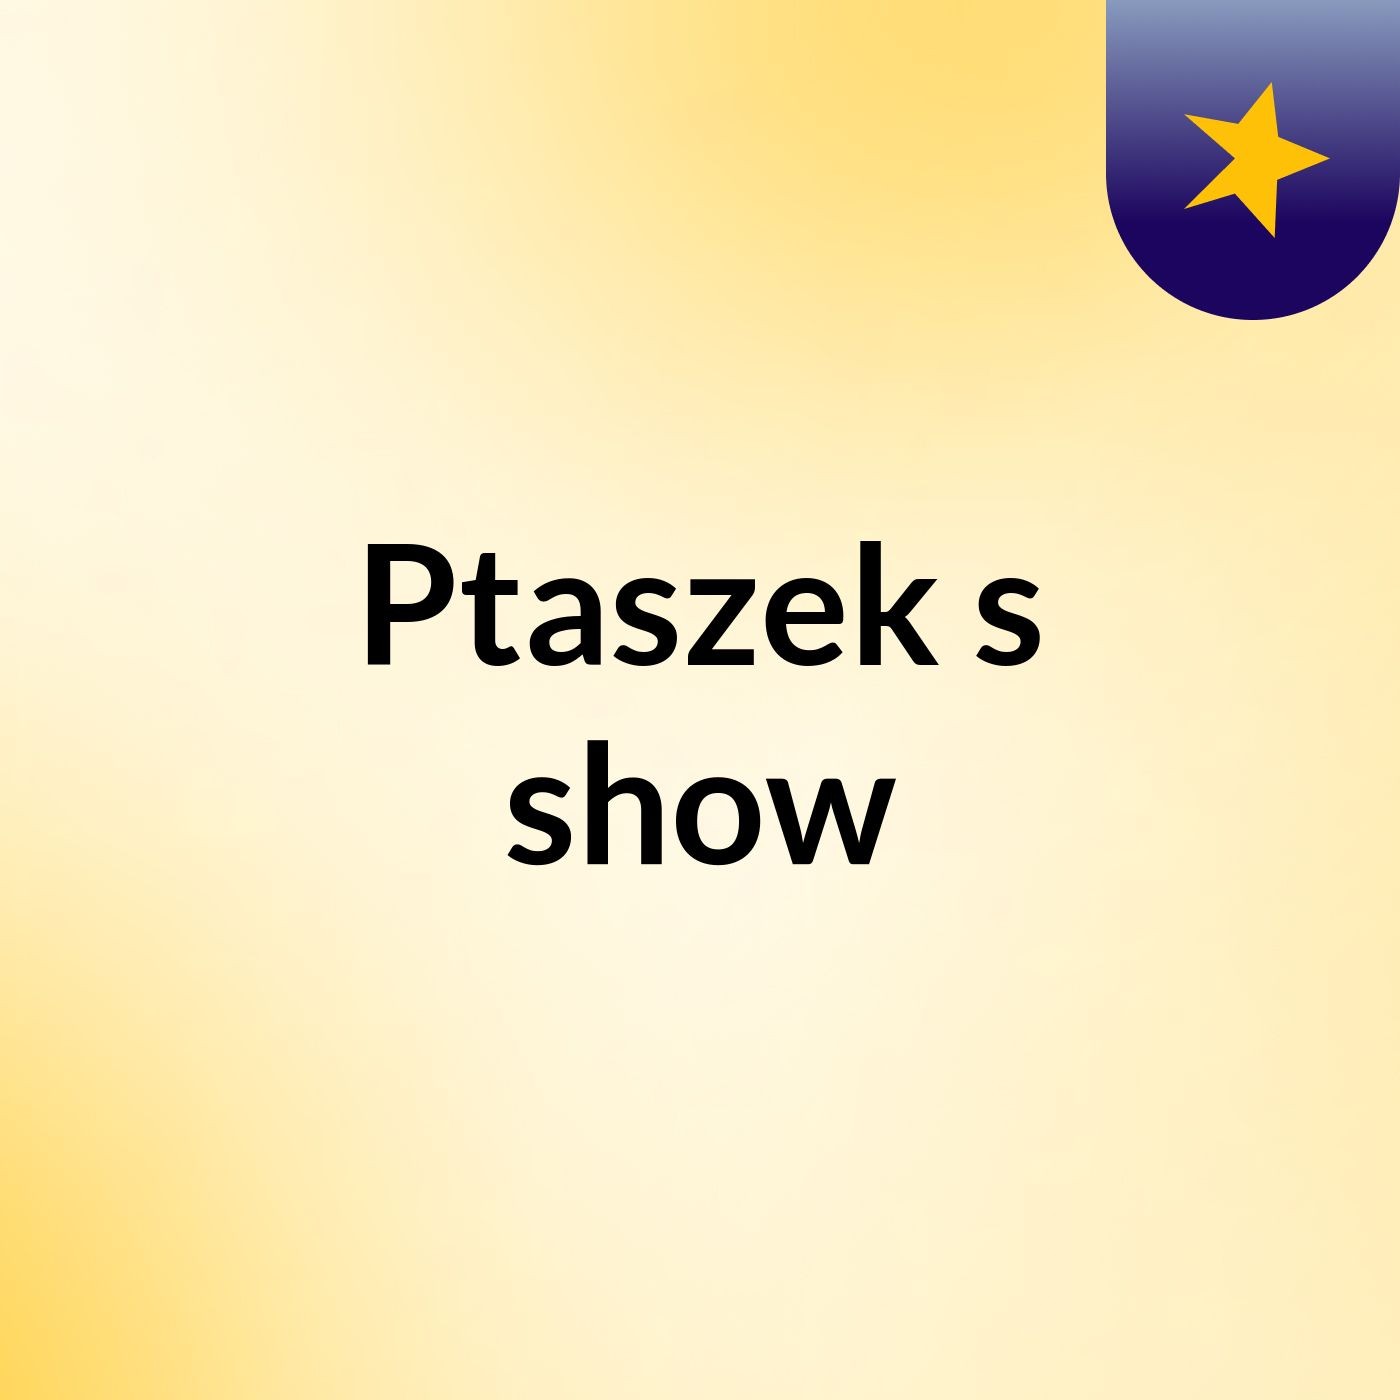 Ptaszek's show